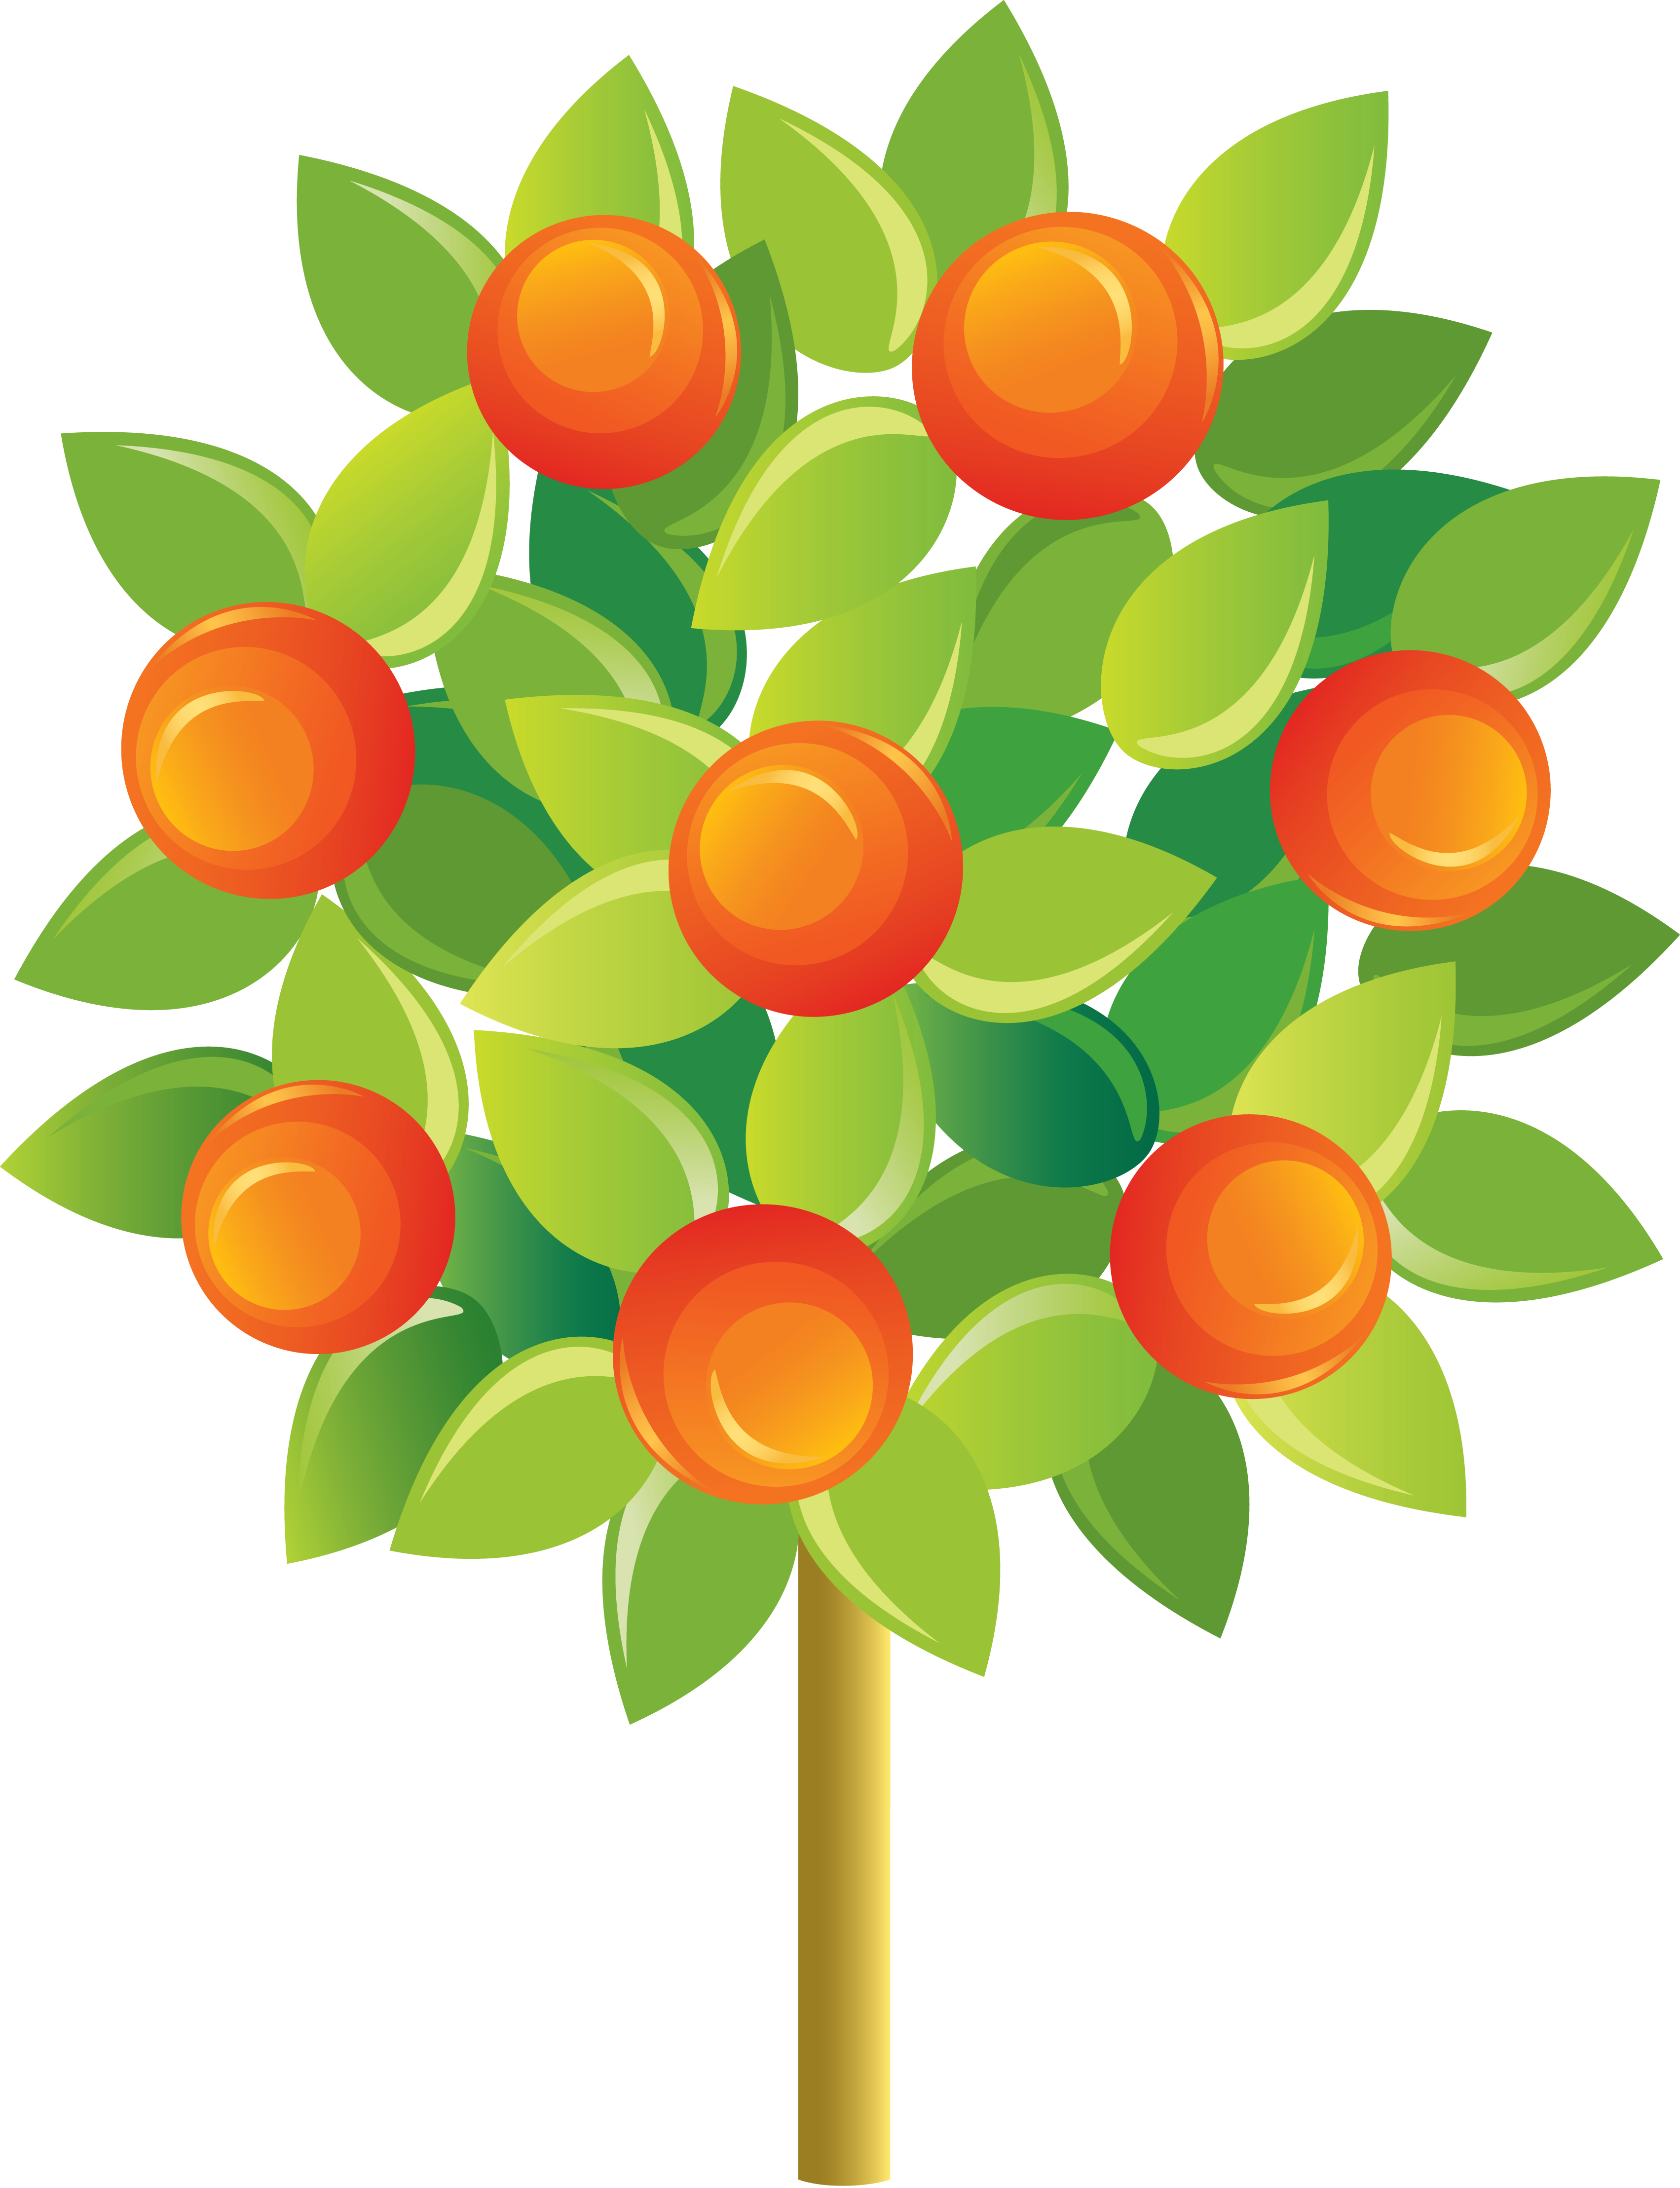 Fruit Tree Tangerine Mandarin Orange - Fruit Tree Tangerine Mandarin Orange (3405x4434)